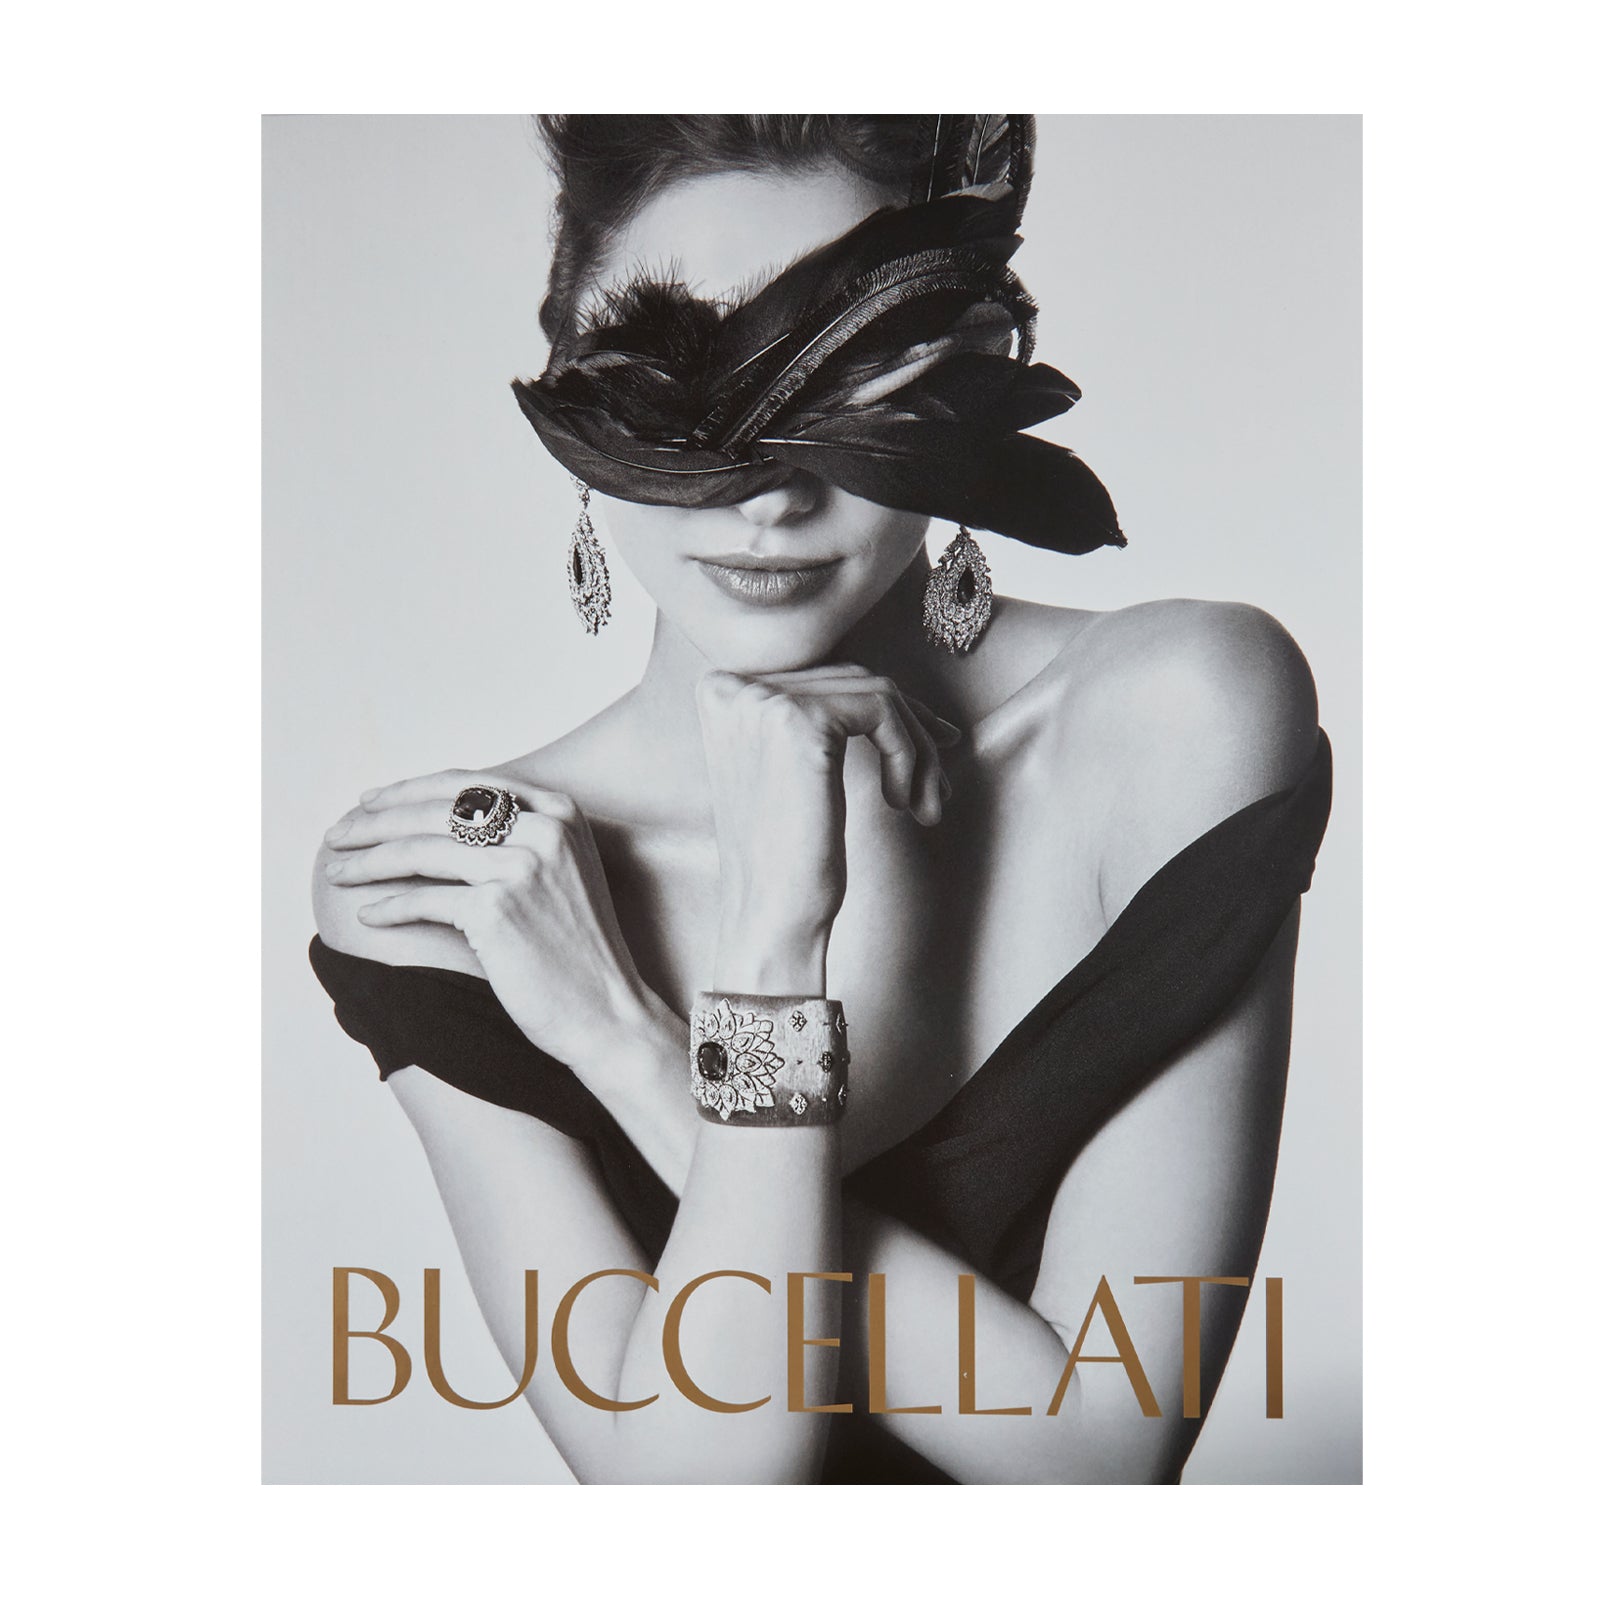 Video marketing campaign for Buccellati luxury jewelry